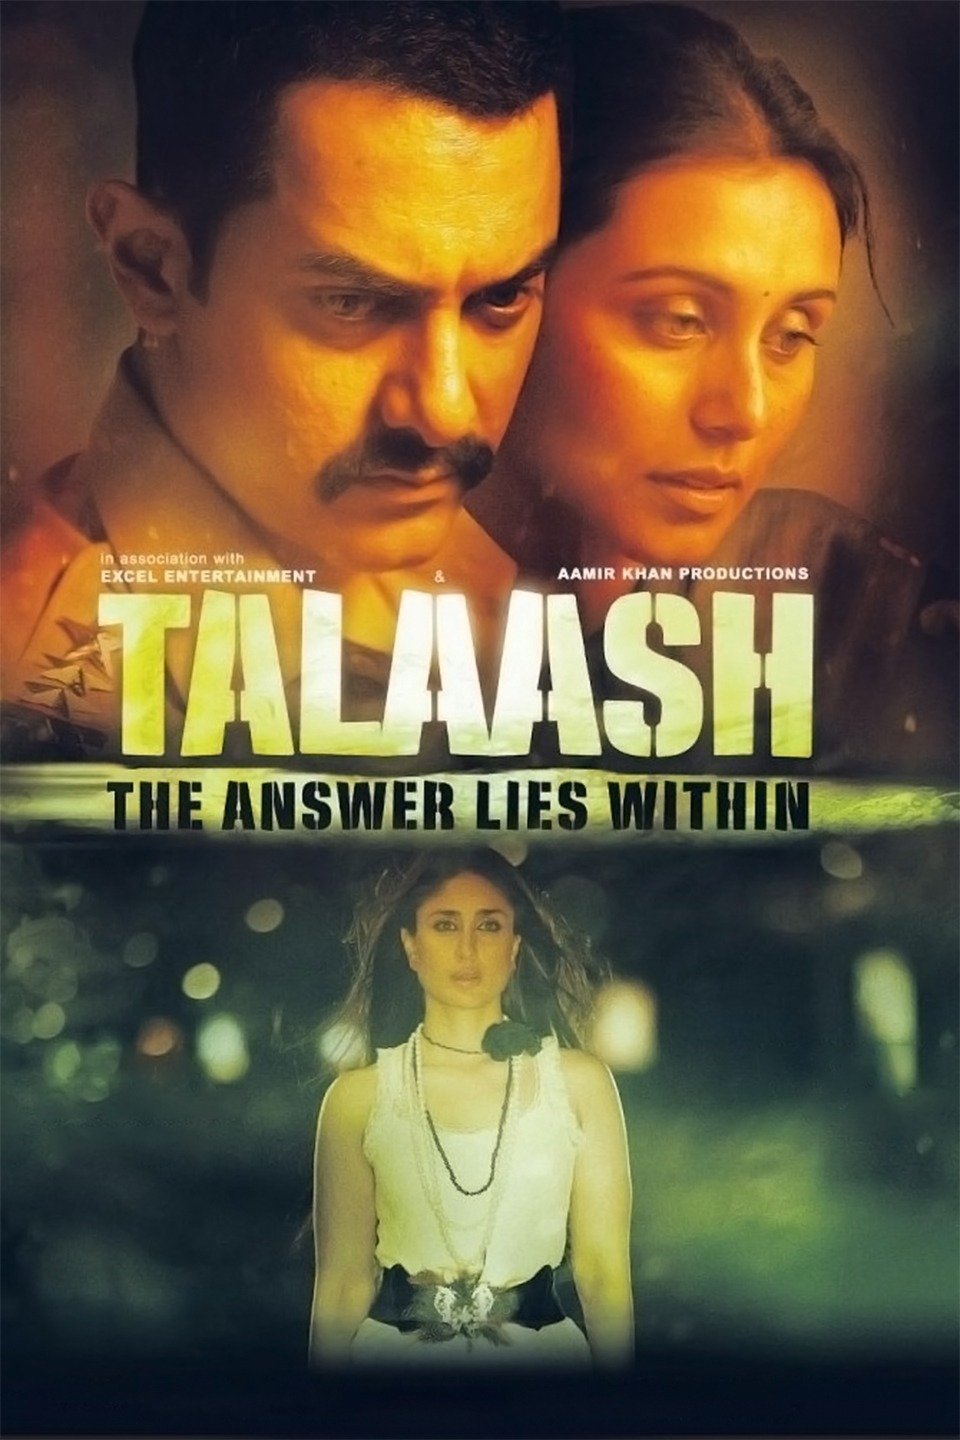 talaash movie 2012 release date